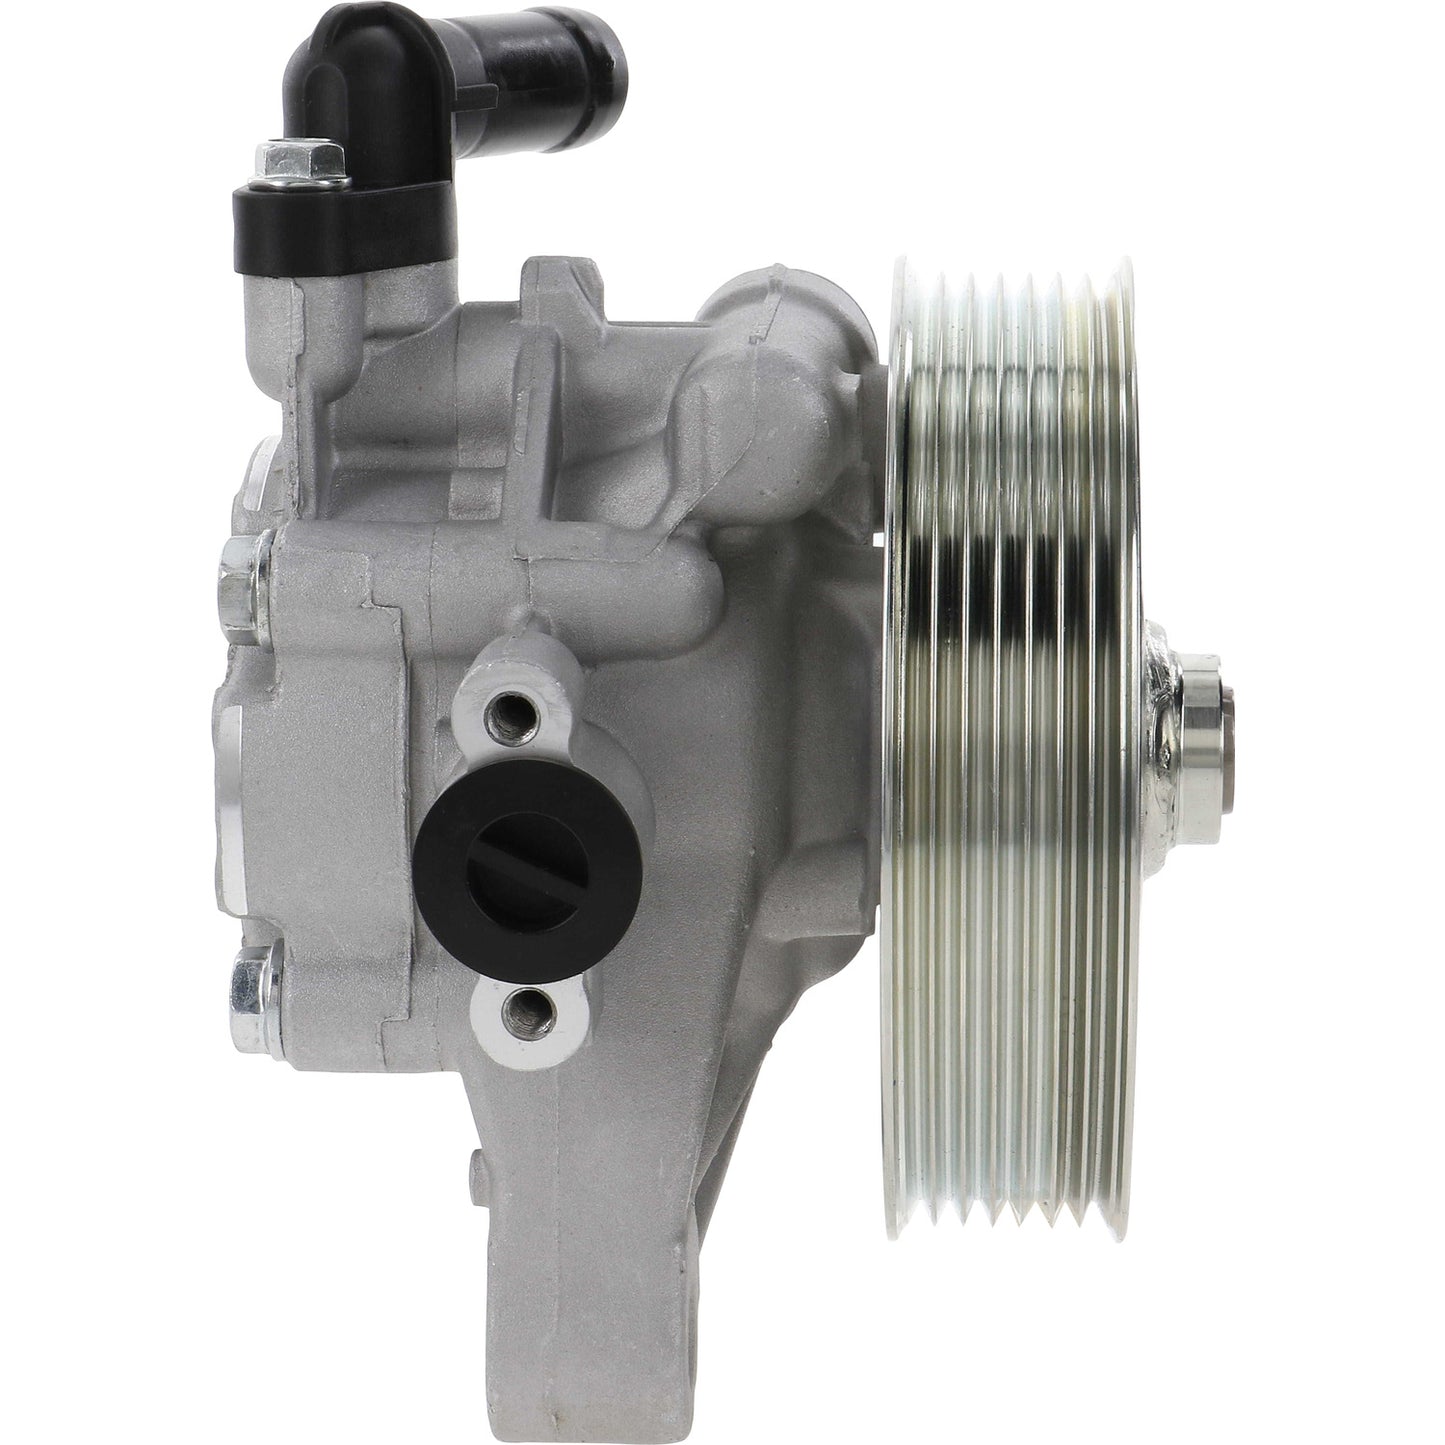 Power Steering Pump - Marathon HP - Hydraulic Power - New - 96575MN